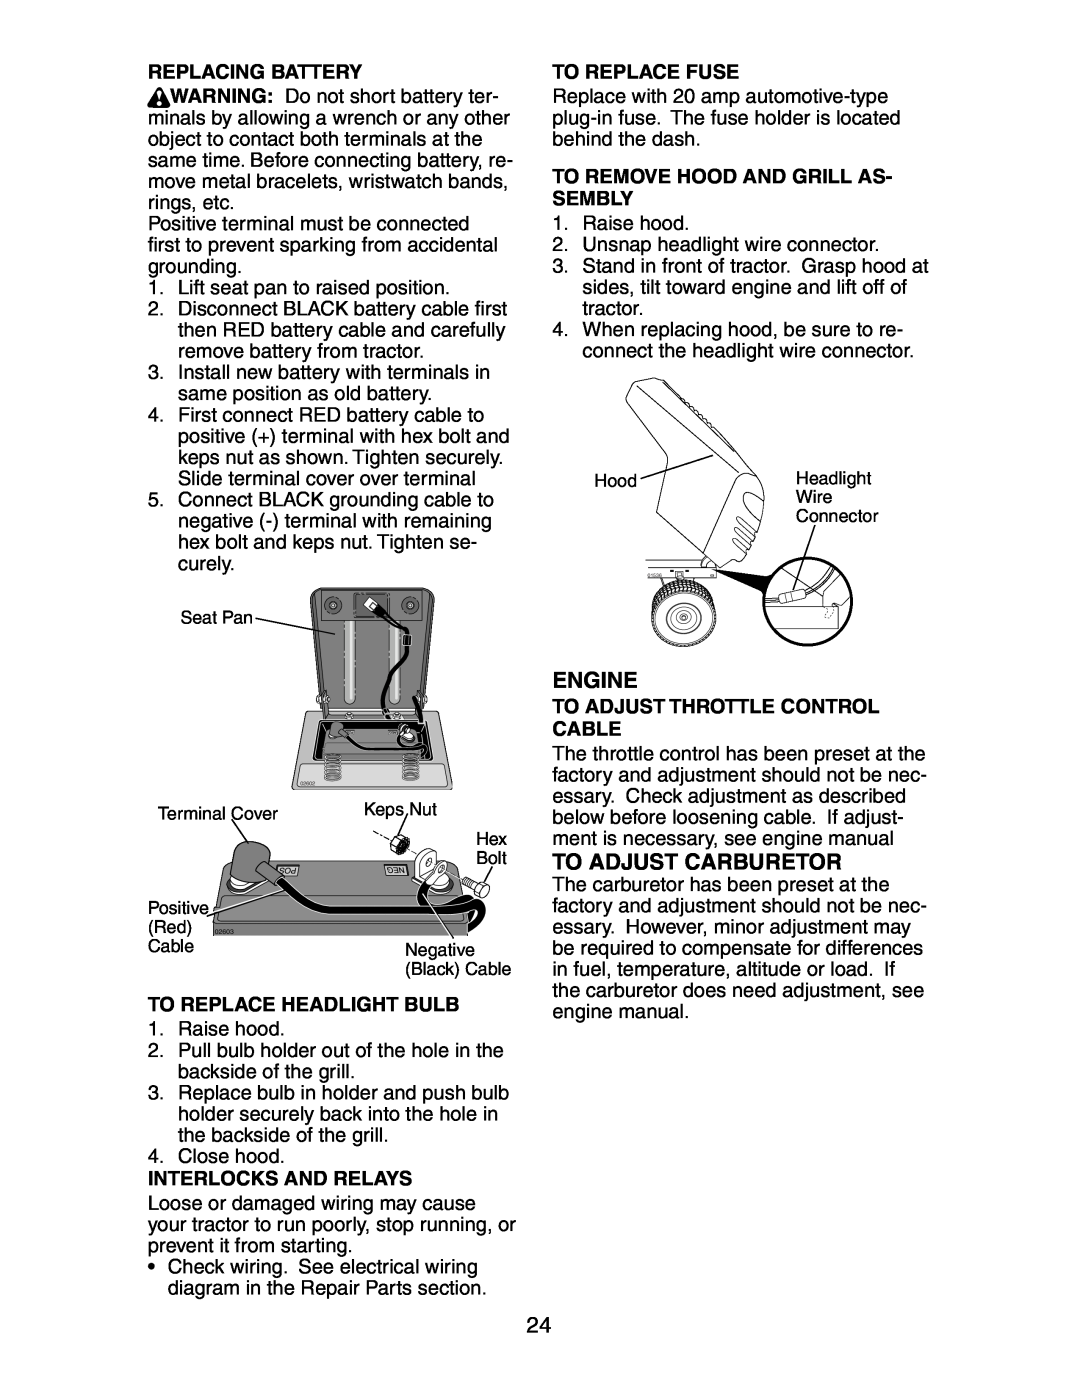 Poulan CN1842STA manual To Adjust Carburetor, Replacing Battery, To Replace Headlight Bulb, Interlocks And Relays, Engine 